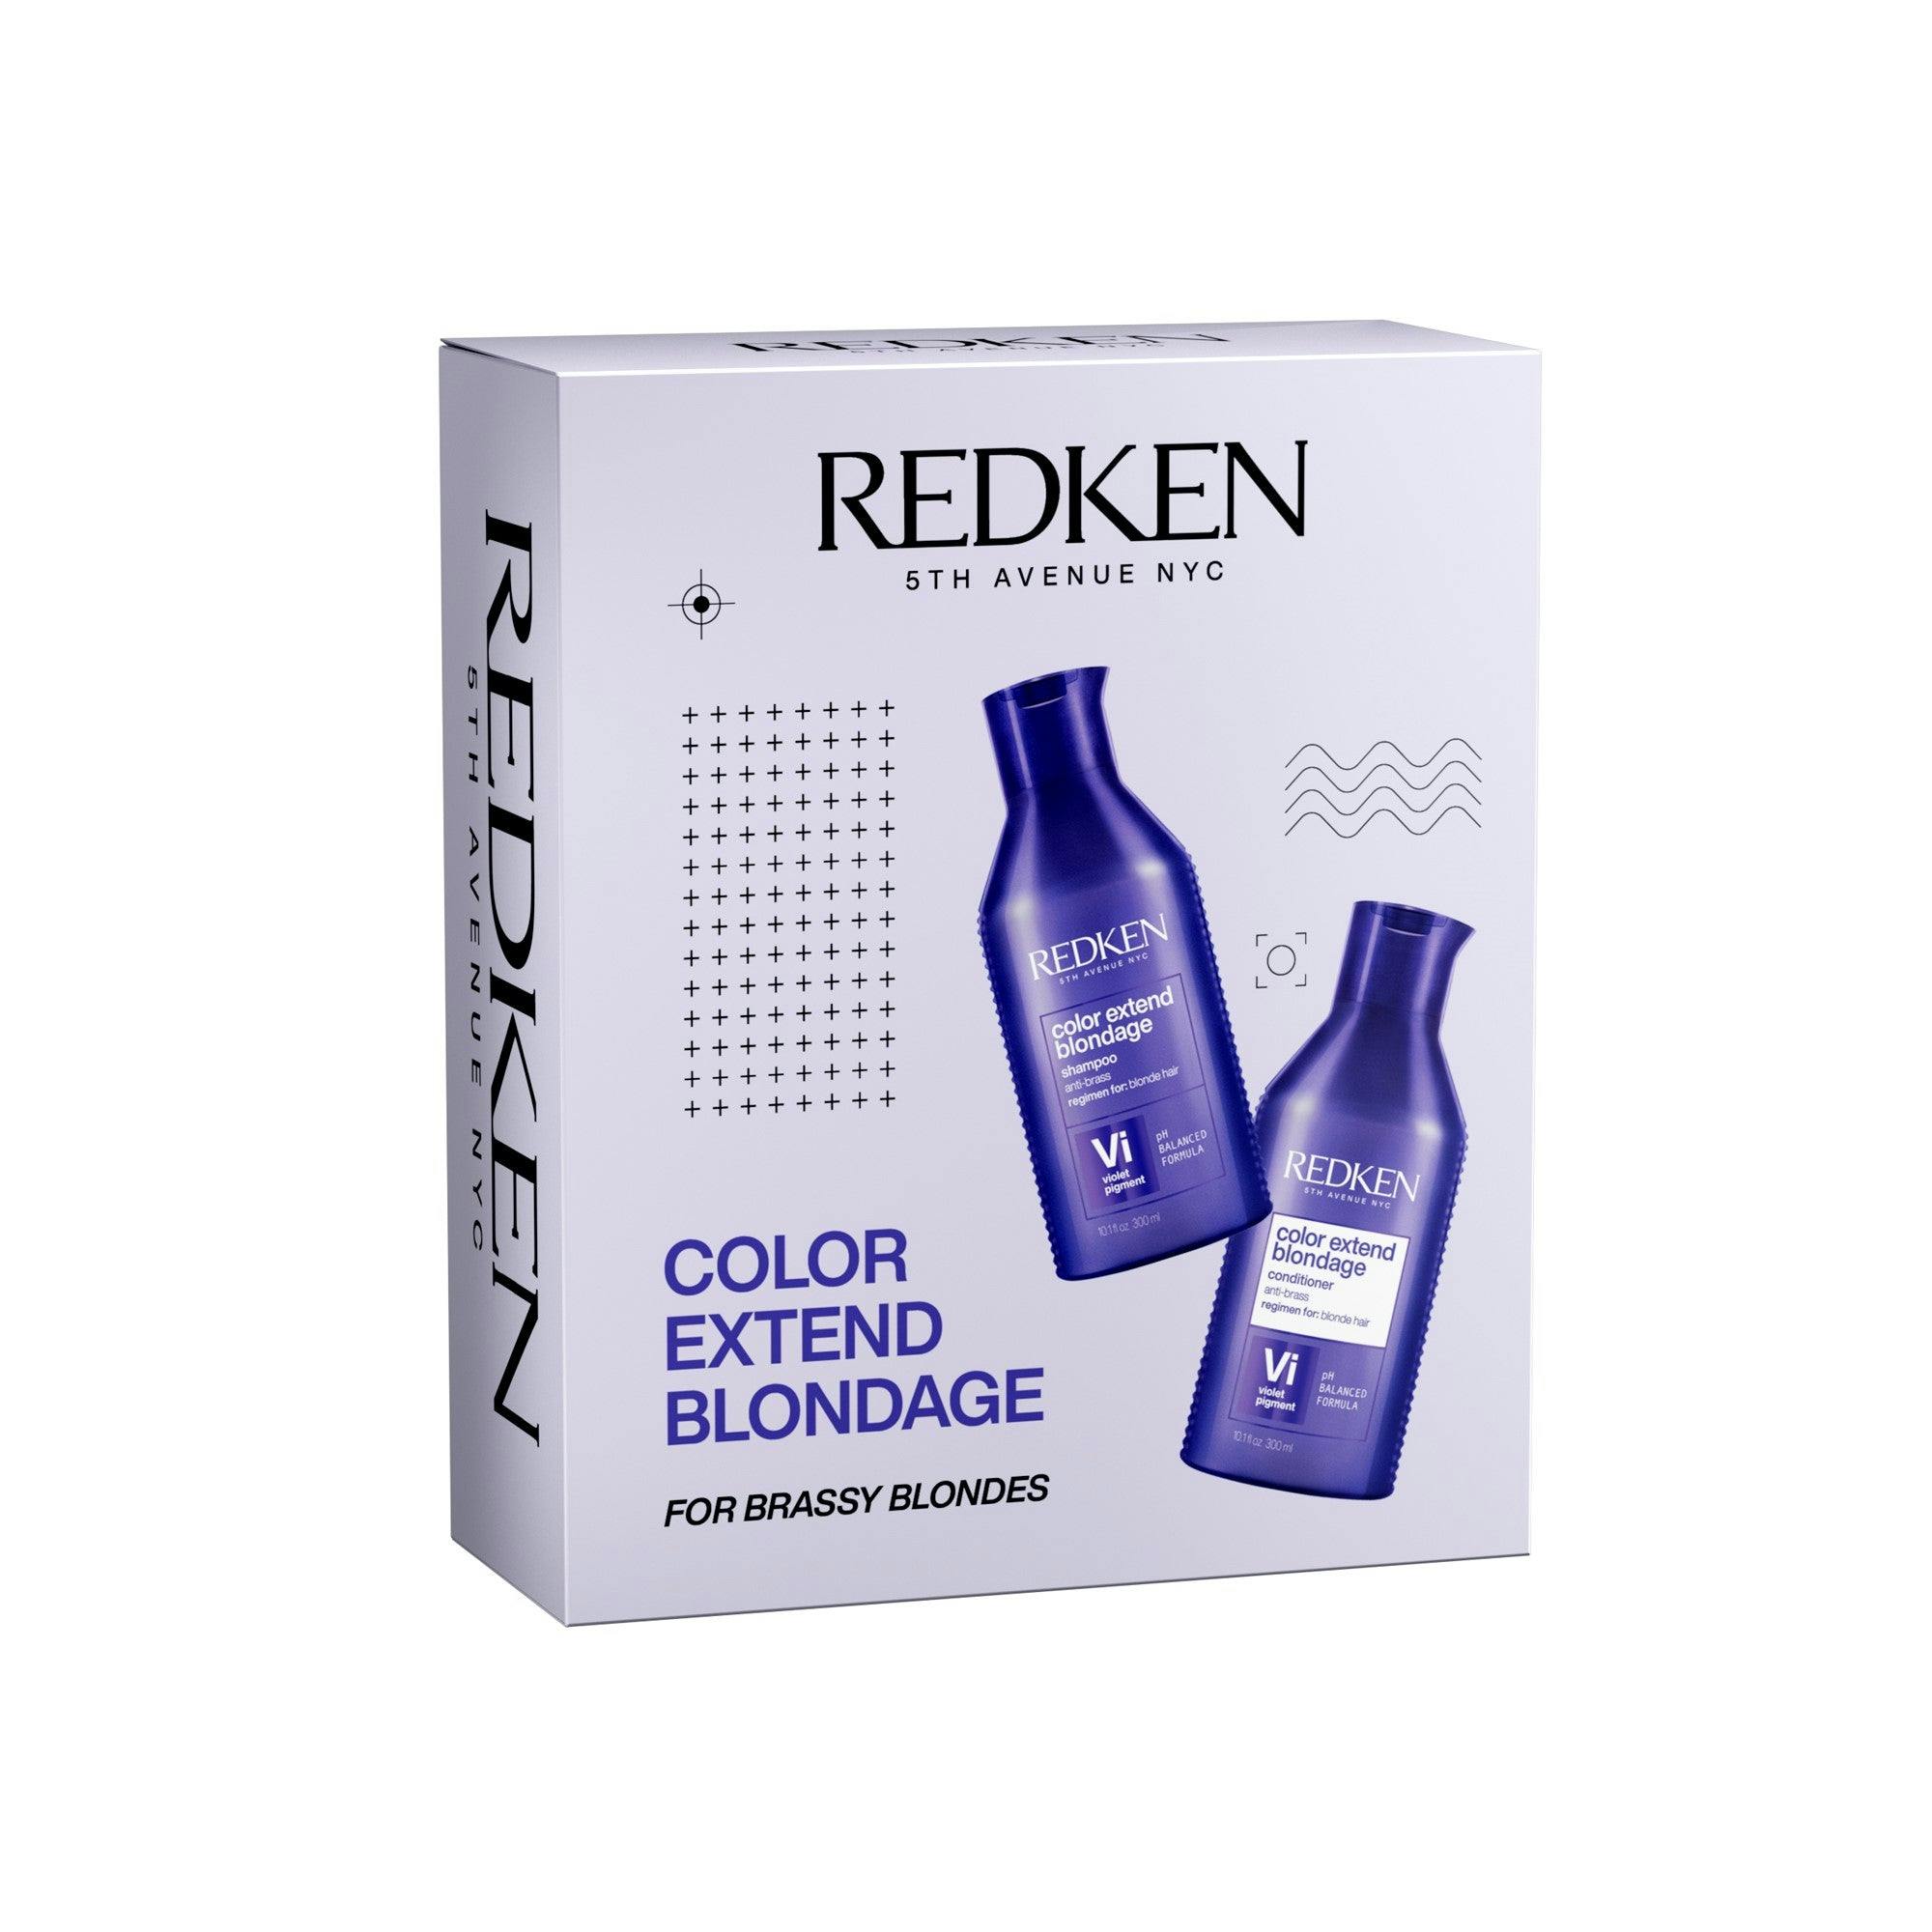 Redken Color Extend Blondage 300ml Duo Pack